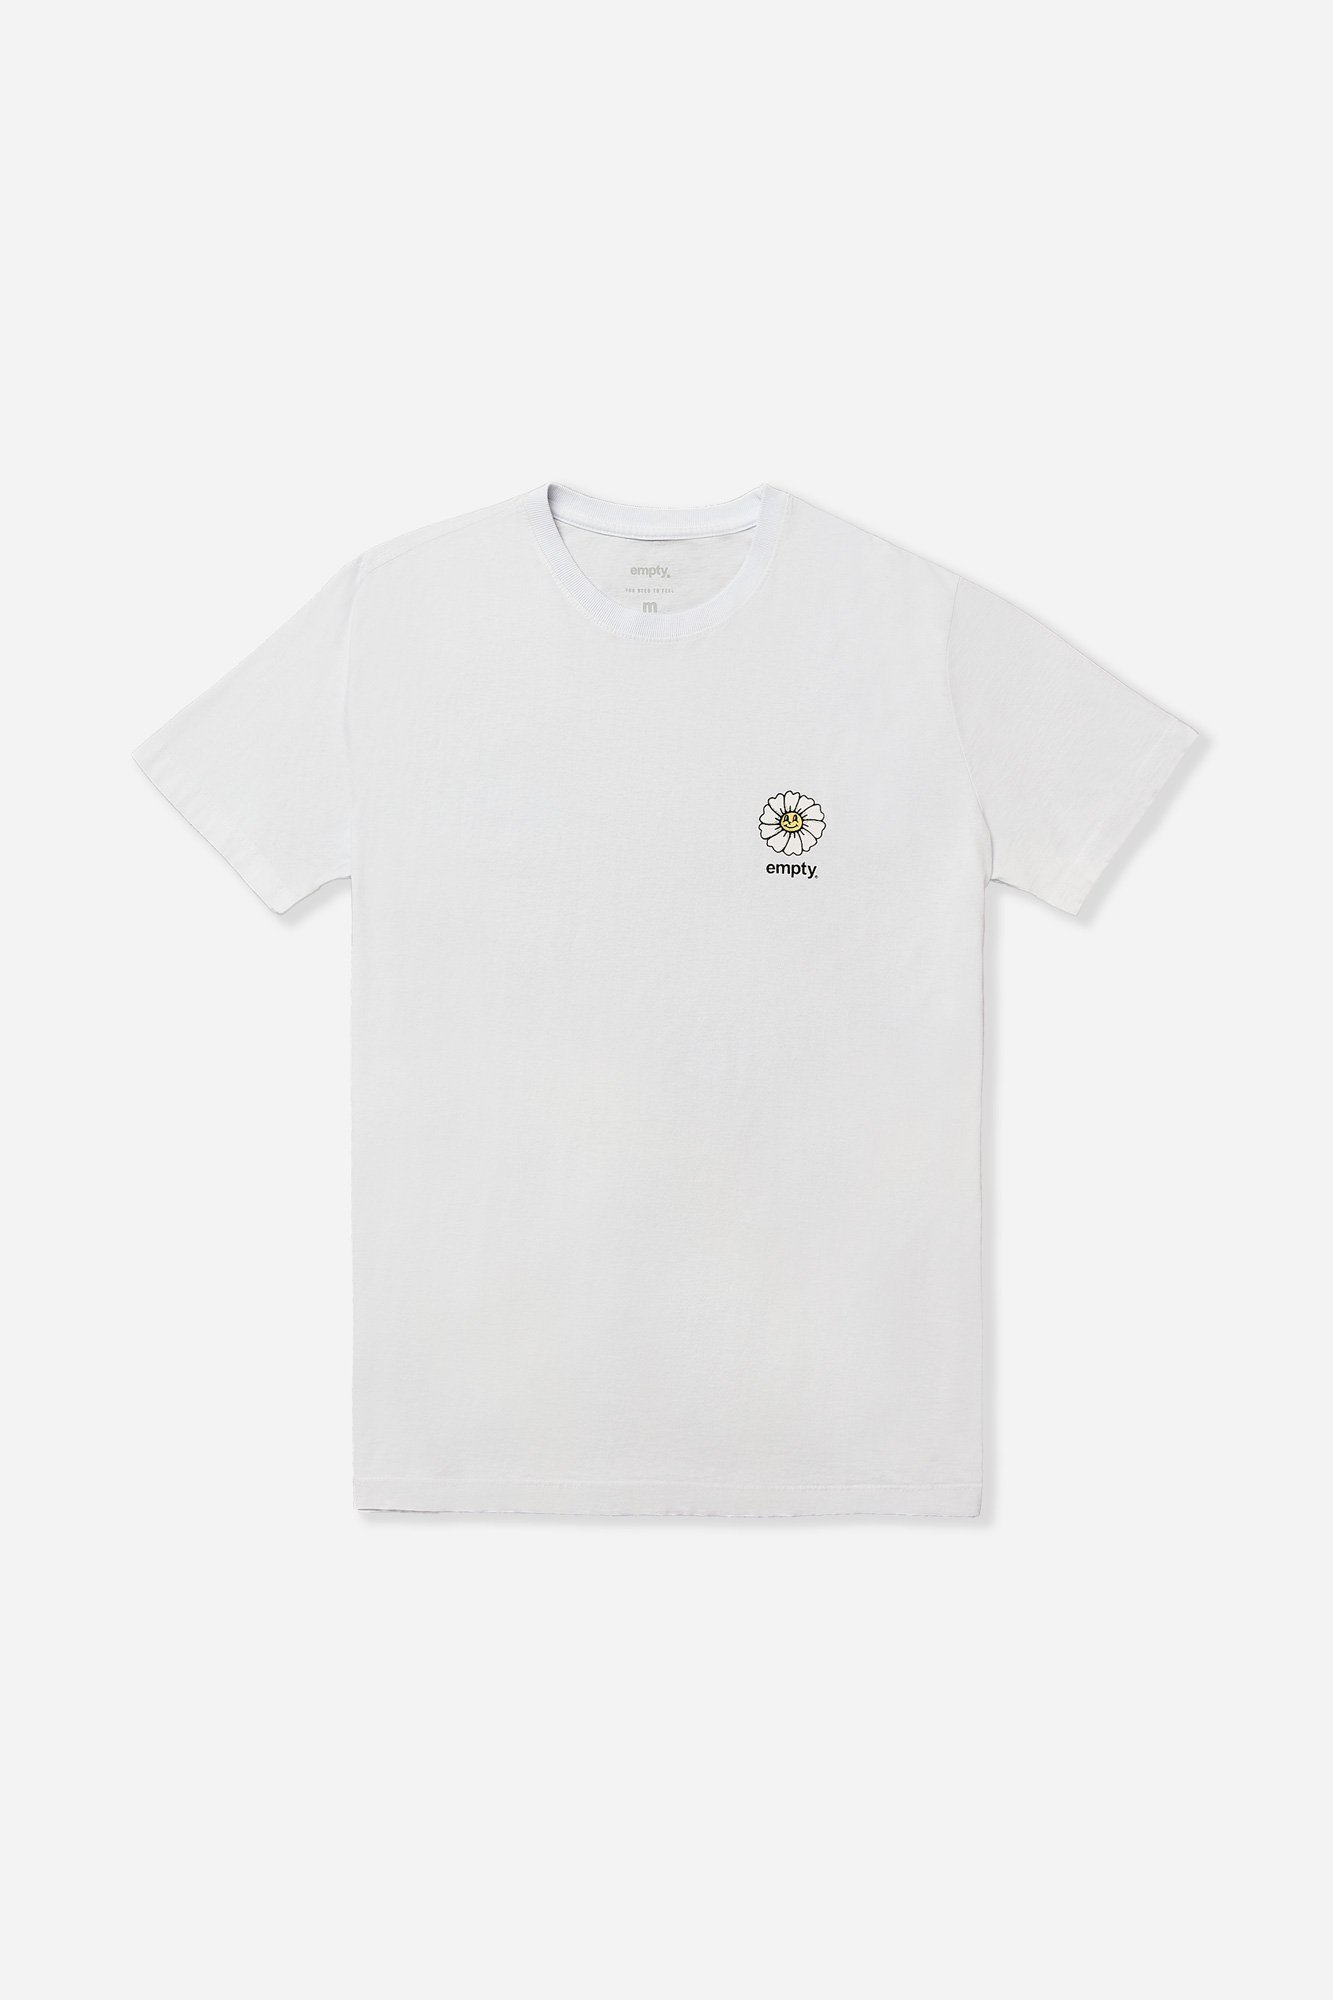 02 camiseta grow branco